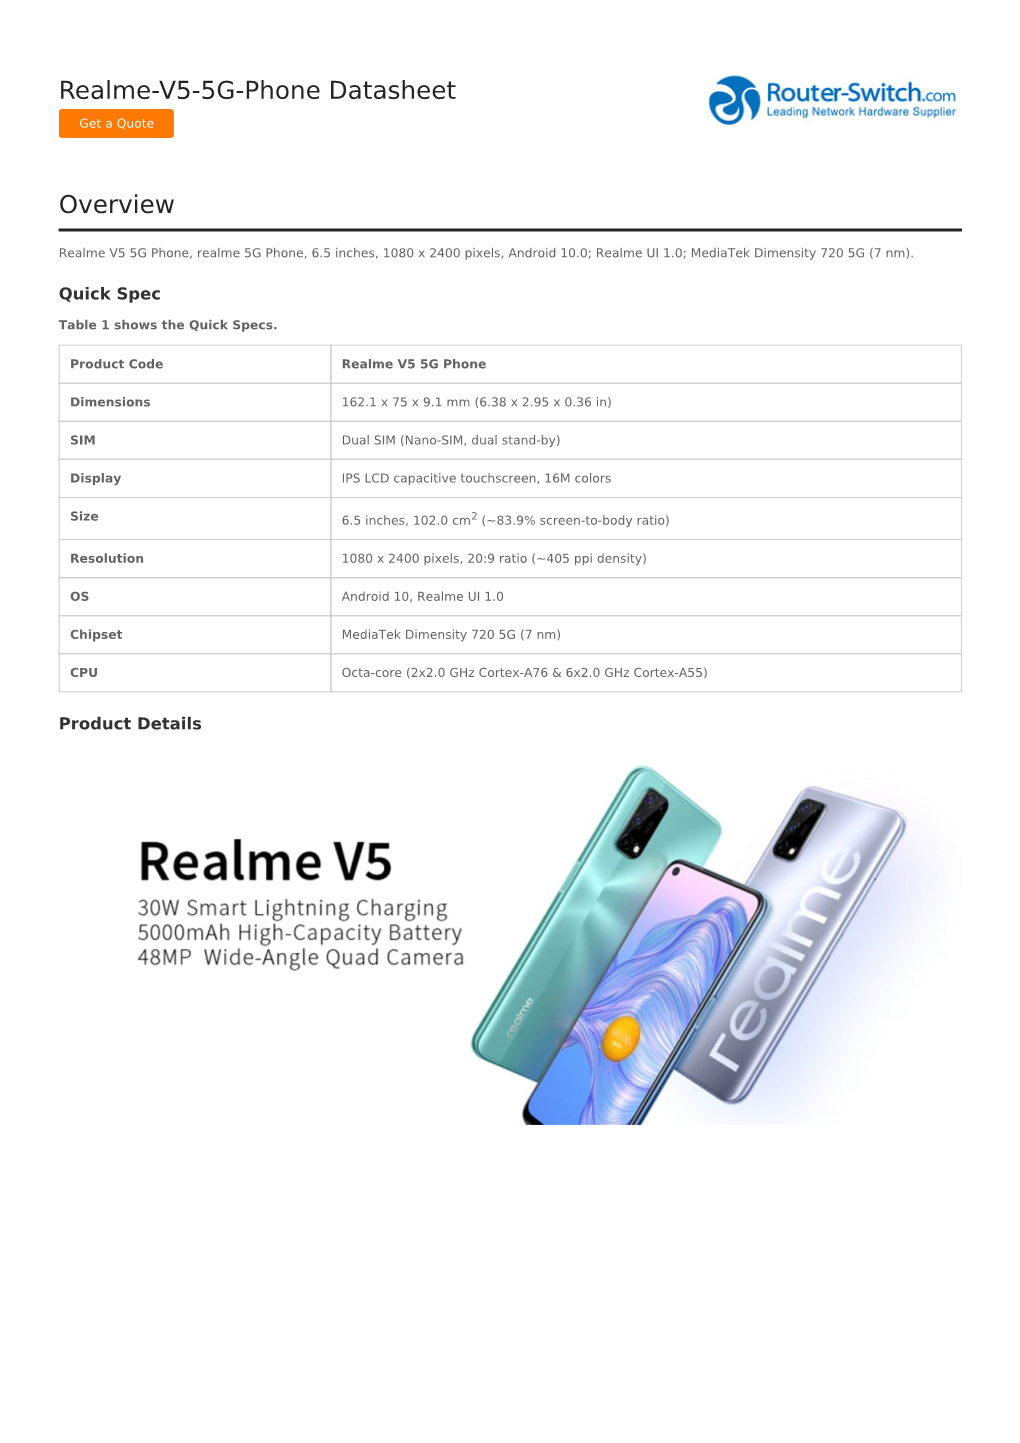 Realme-V5-5G-Phone Datasheet Overview